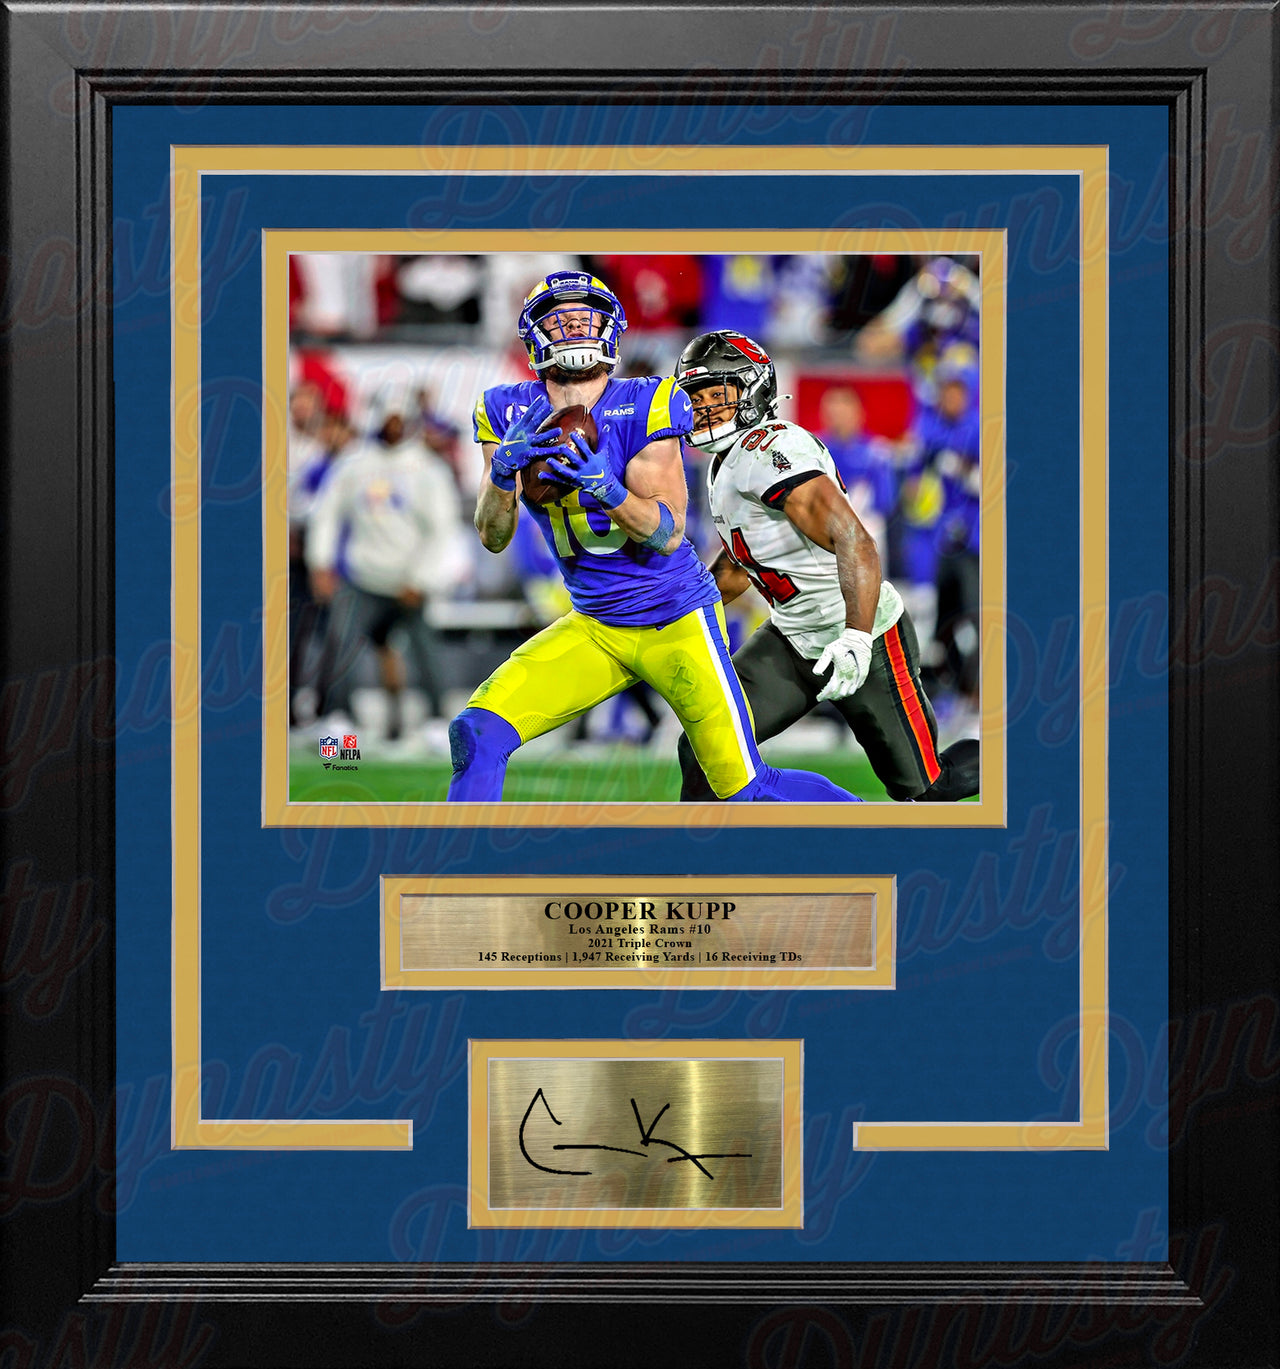 Cooper Kupp named MVP of Super Bowl LVI after Rams win - Sports